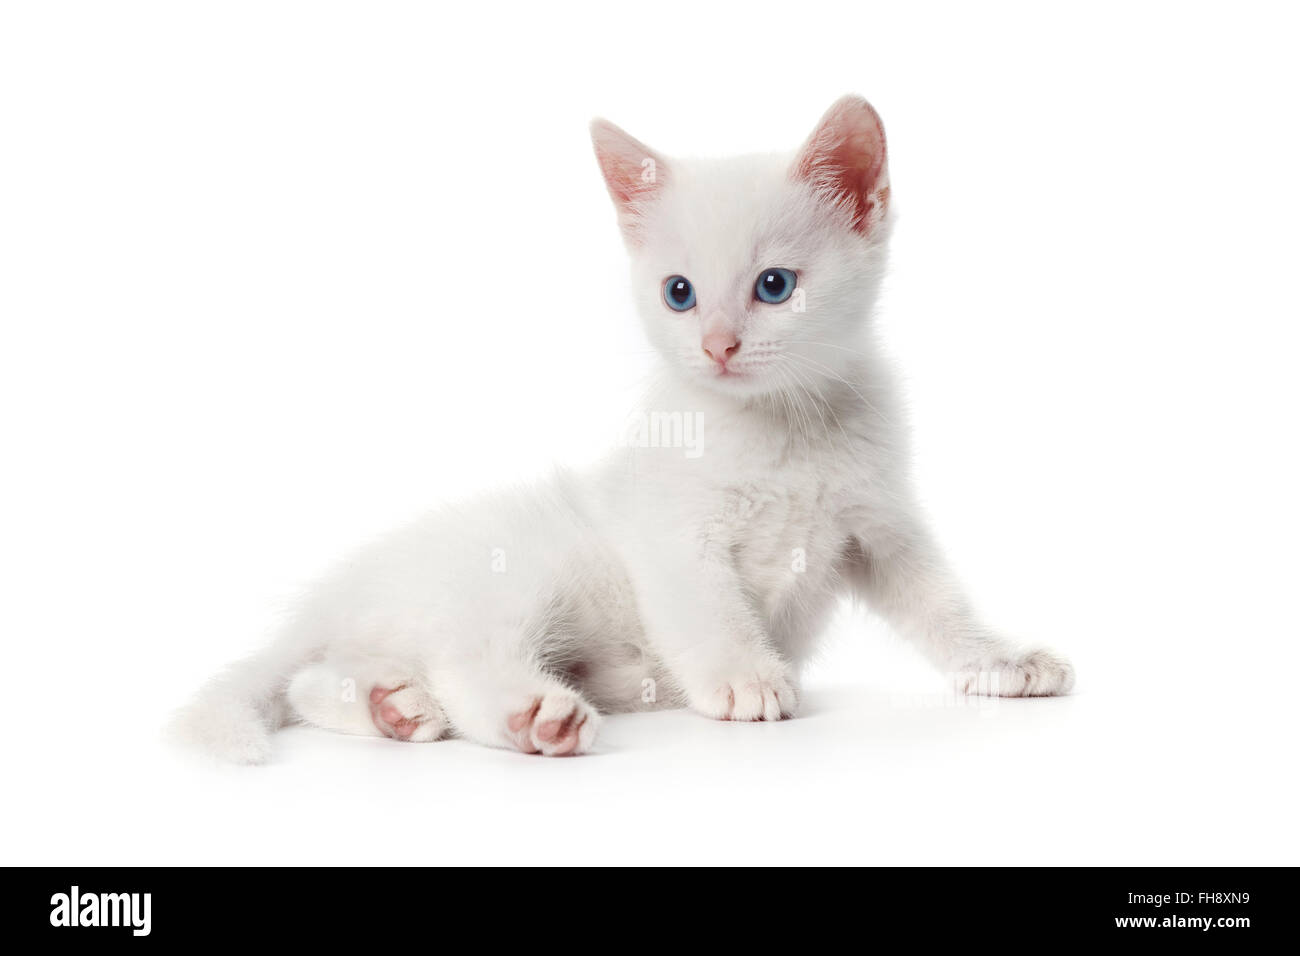 Cute white kitten with blue eyes on white background Stock Photo